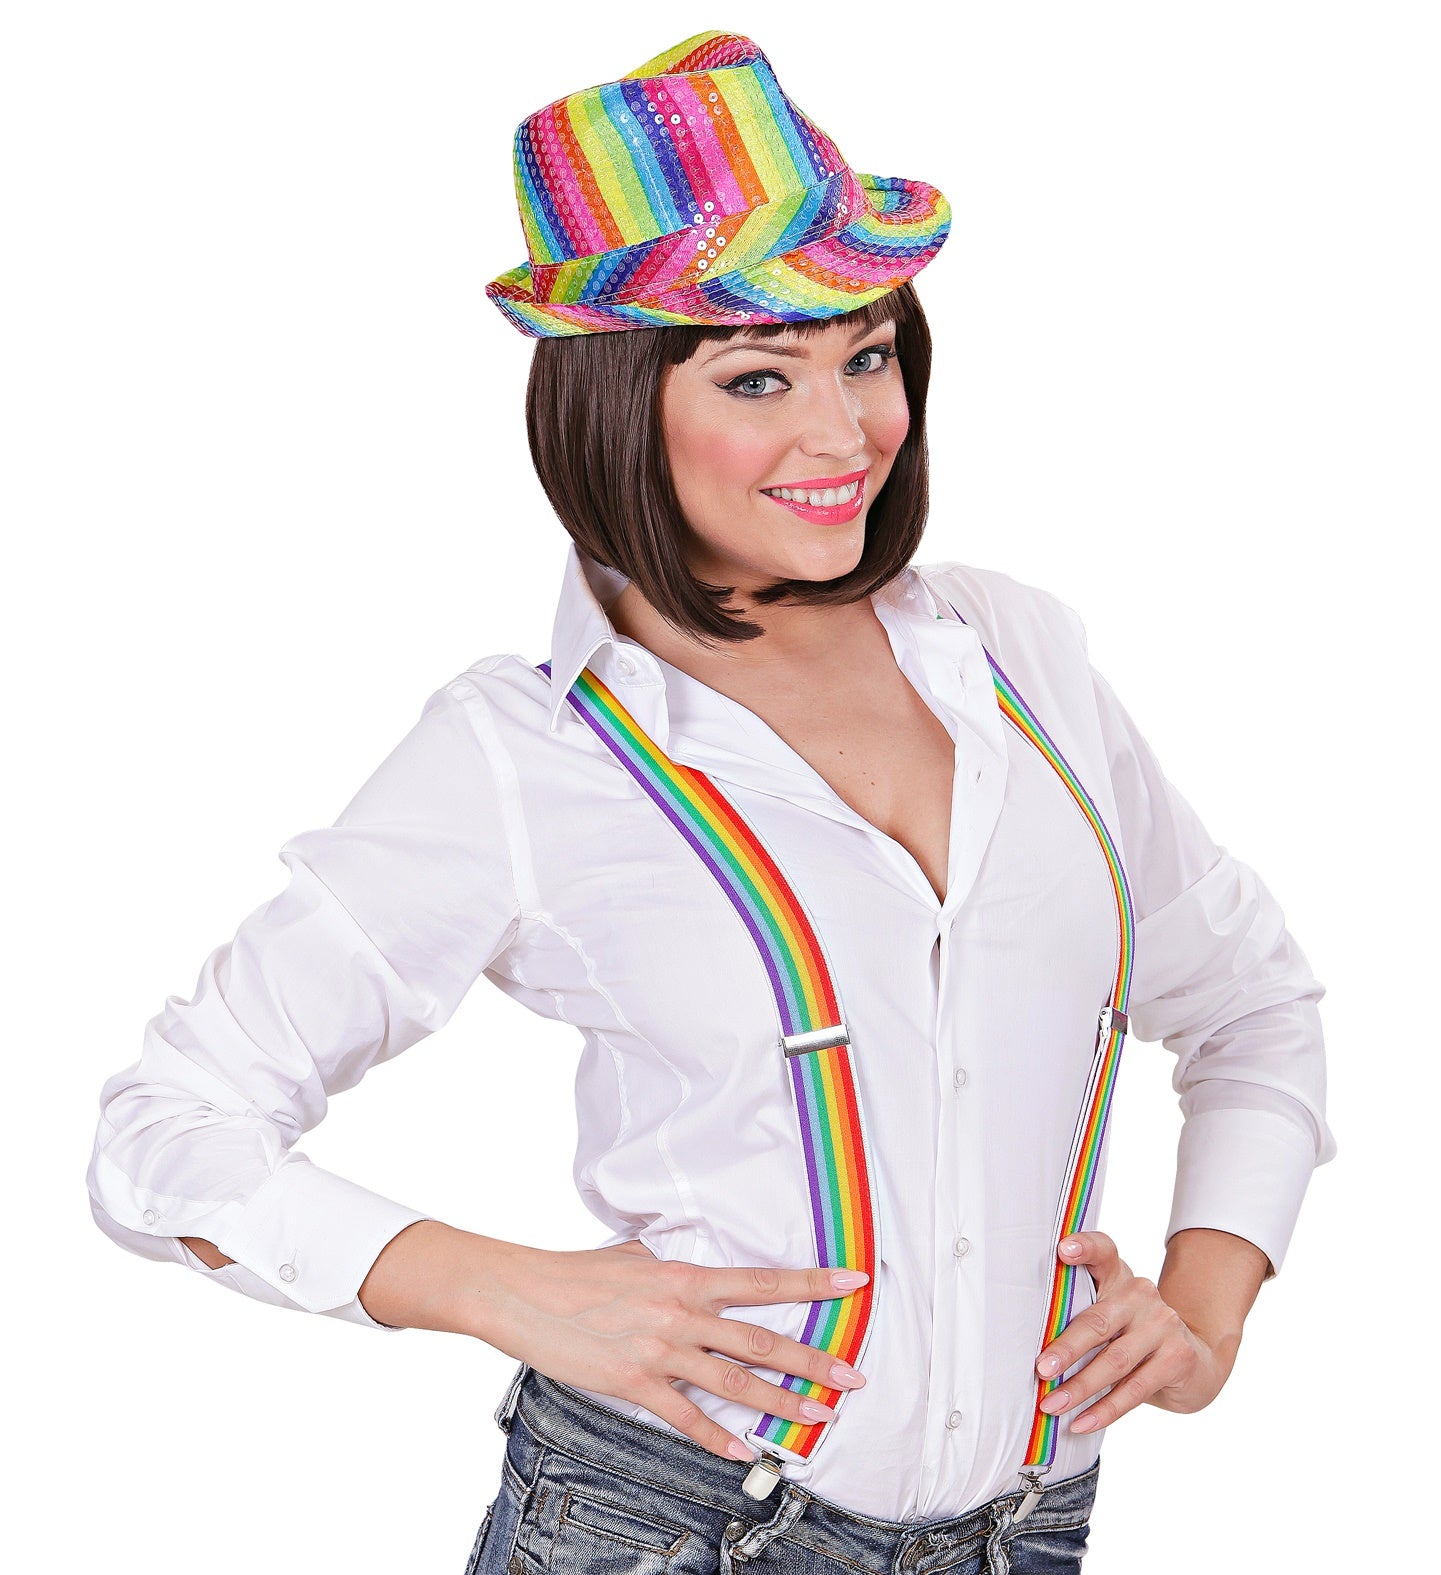 Rainbow Braces clown costume accessory